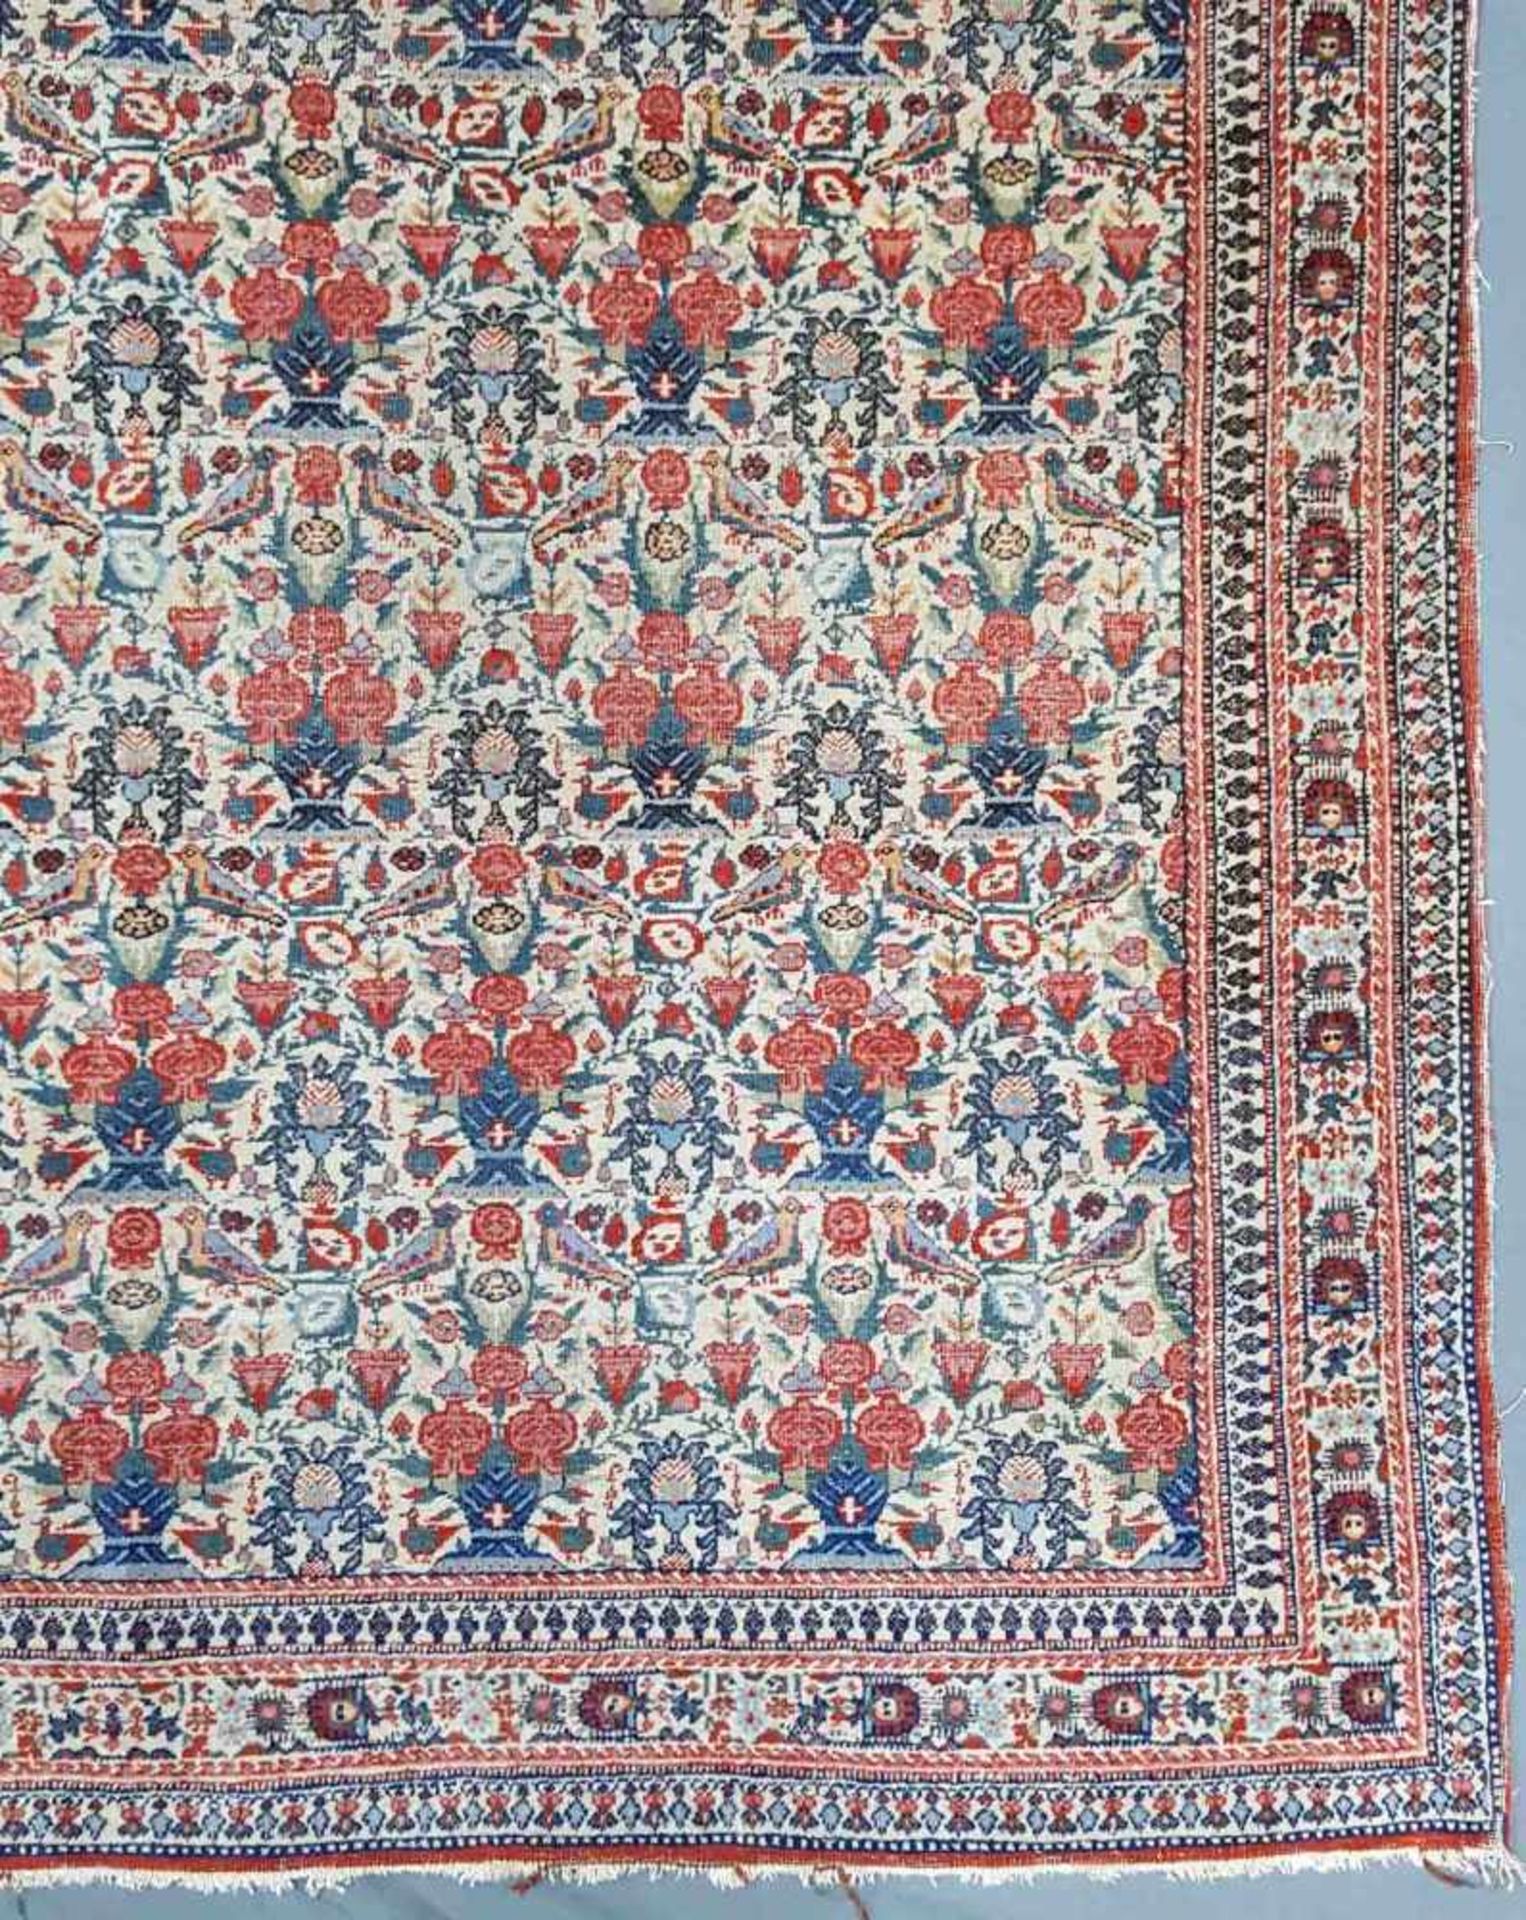 Tehran Persian carpet. "Zili - Sultani" pattern. Iran. Antique. Around 1900. - Image 3 of 7